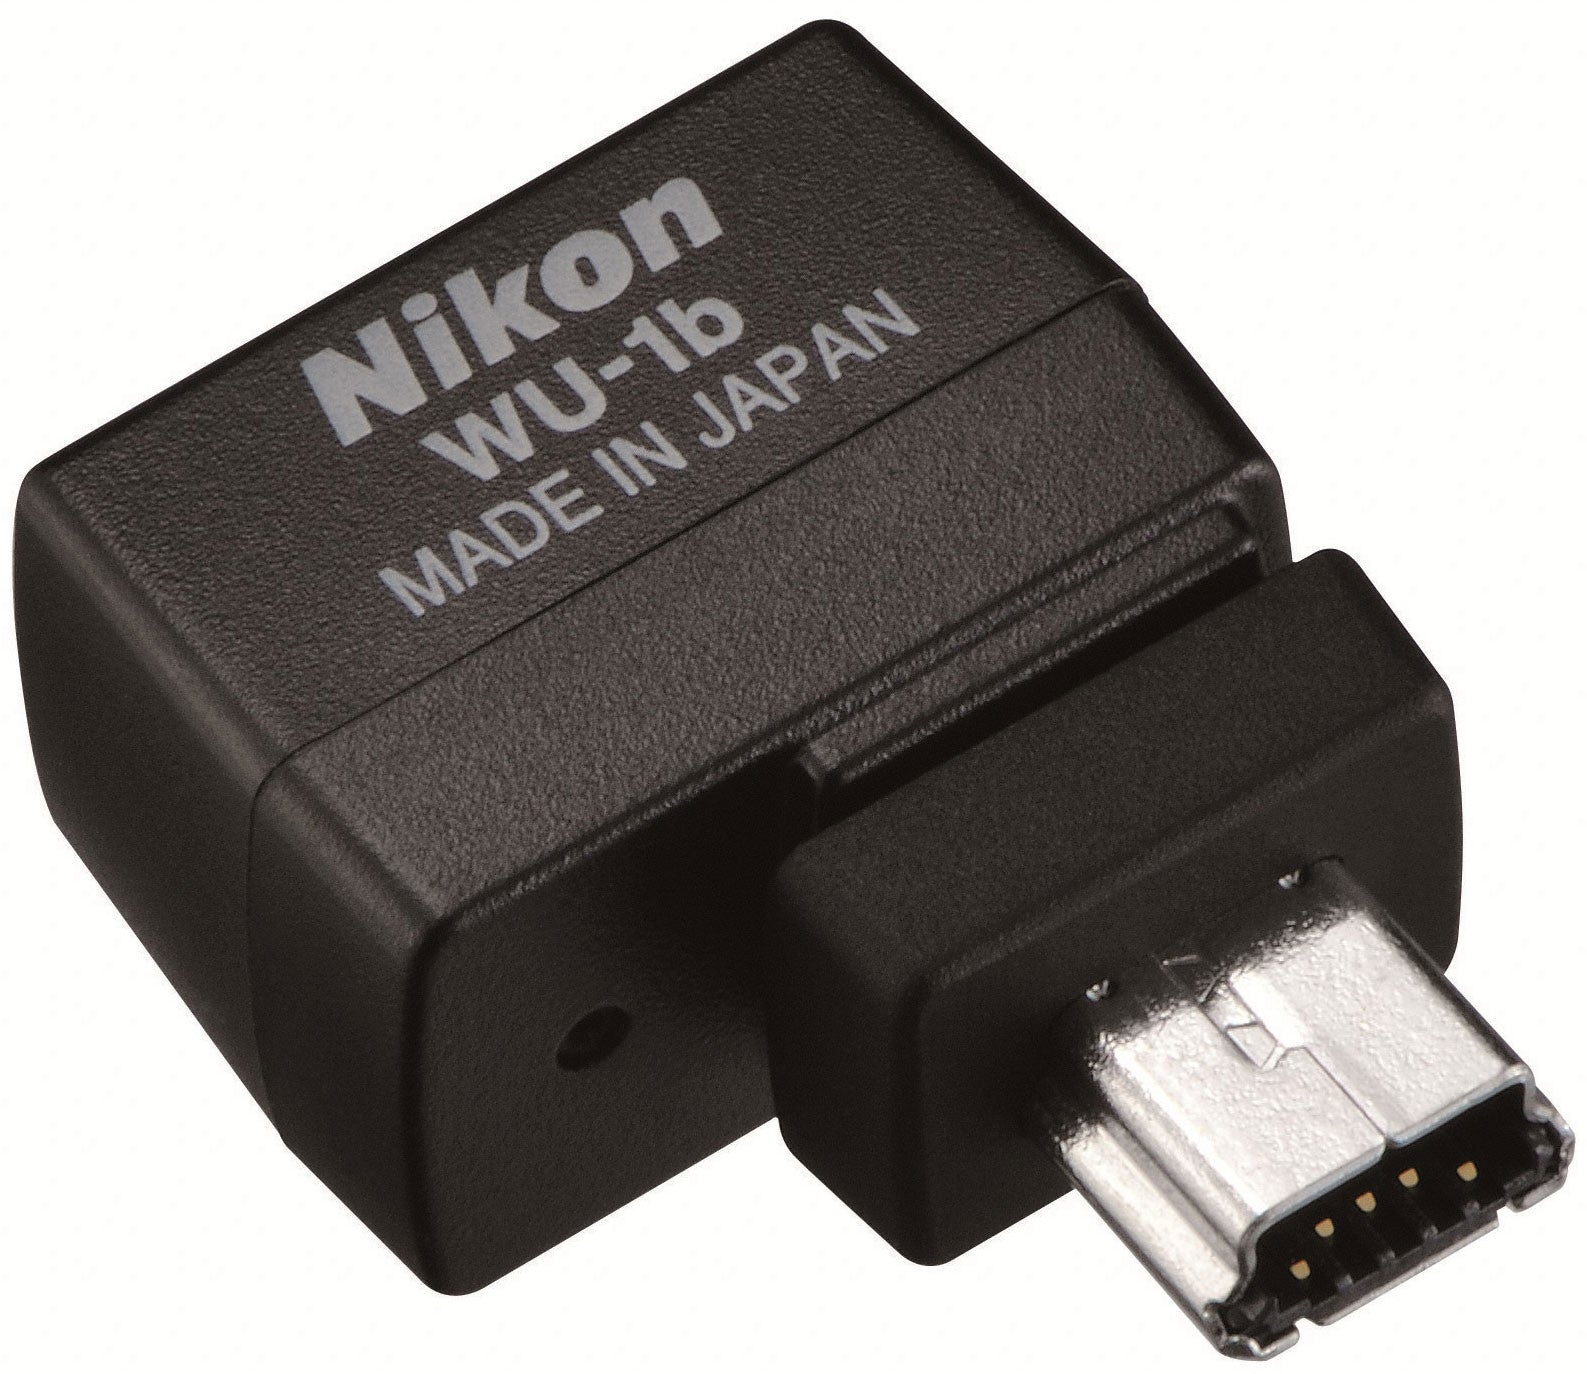 Nikon WU-1b Wireless Mobile Adapter, camera accessories, Nikon - Pictureline 